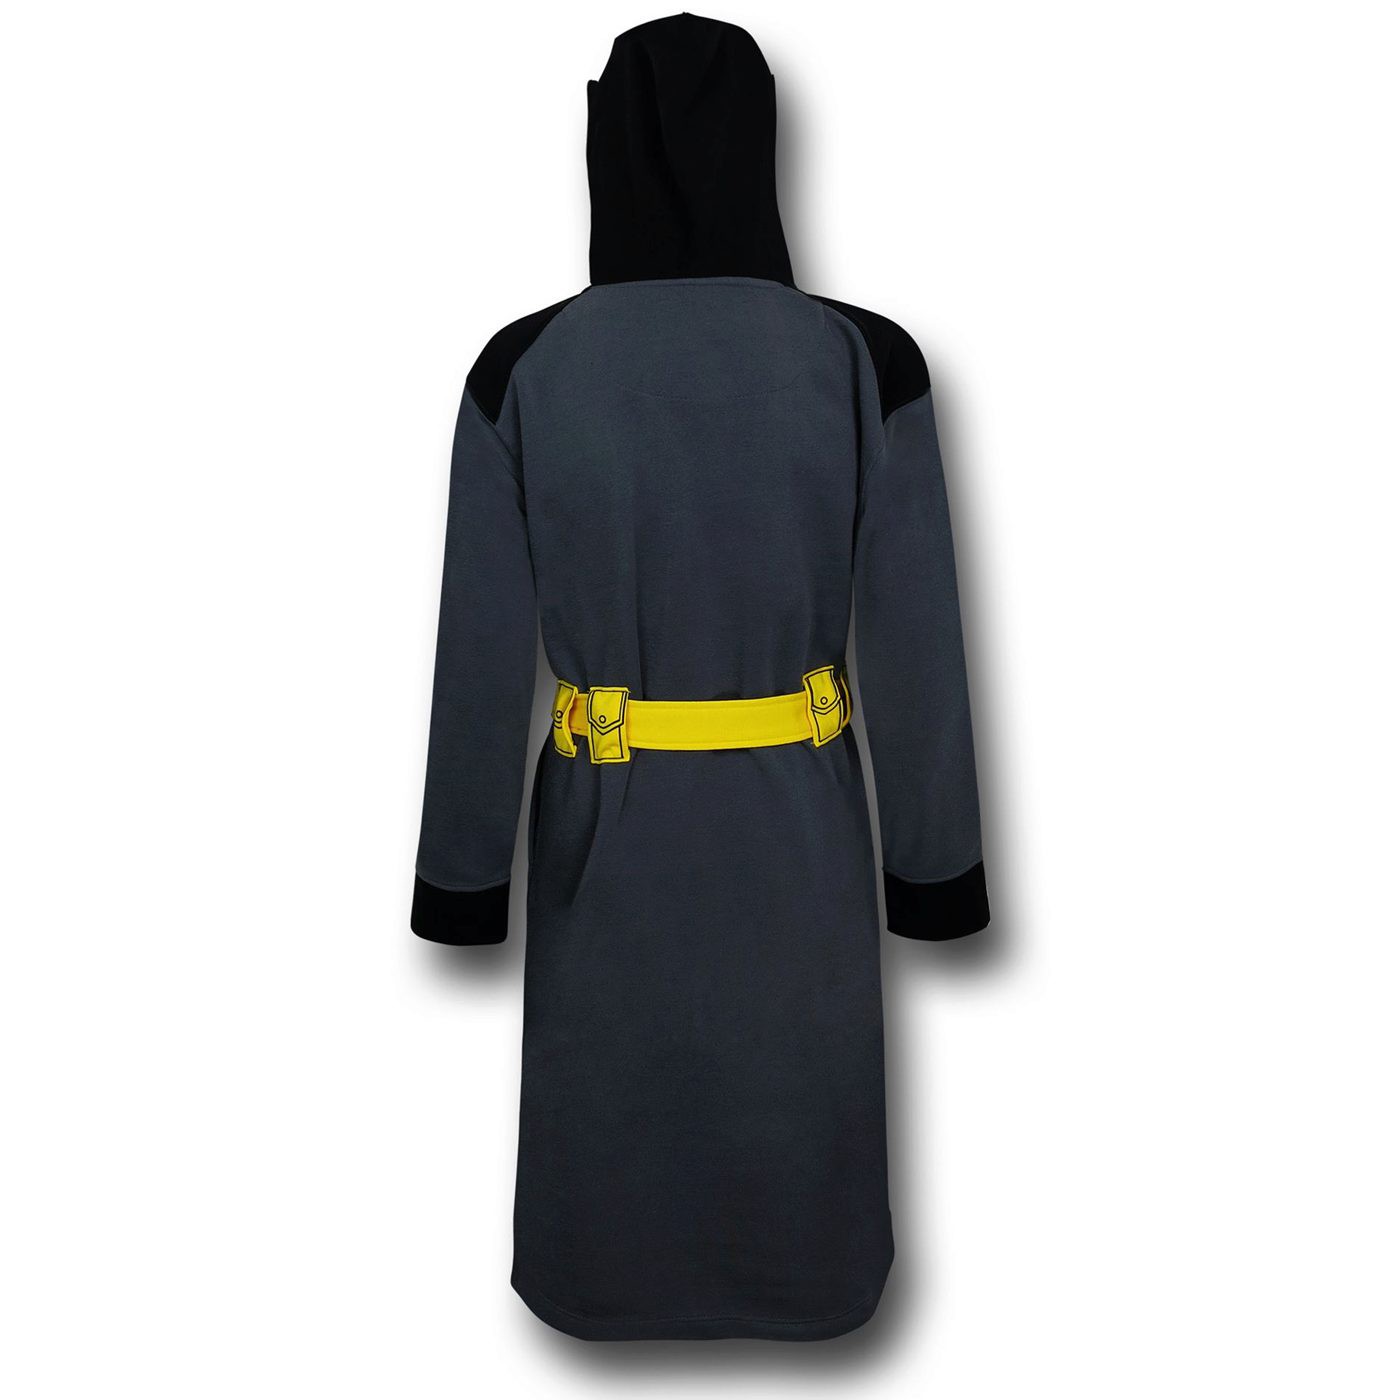 Batman Hooded Robe with Belt